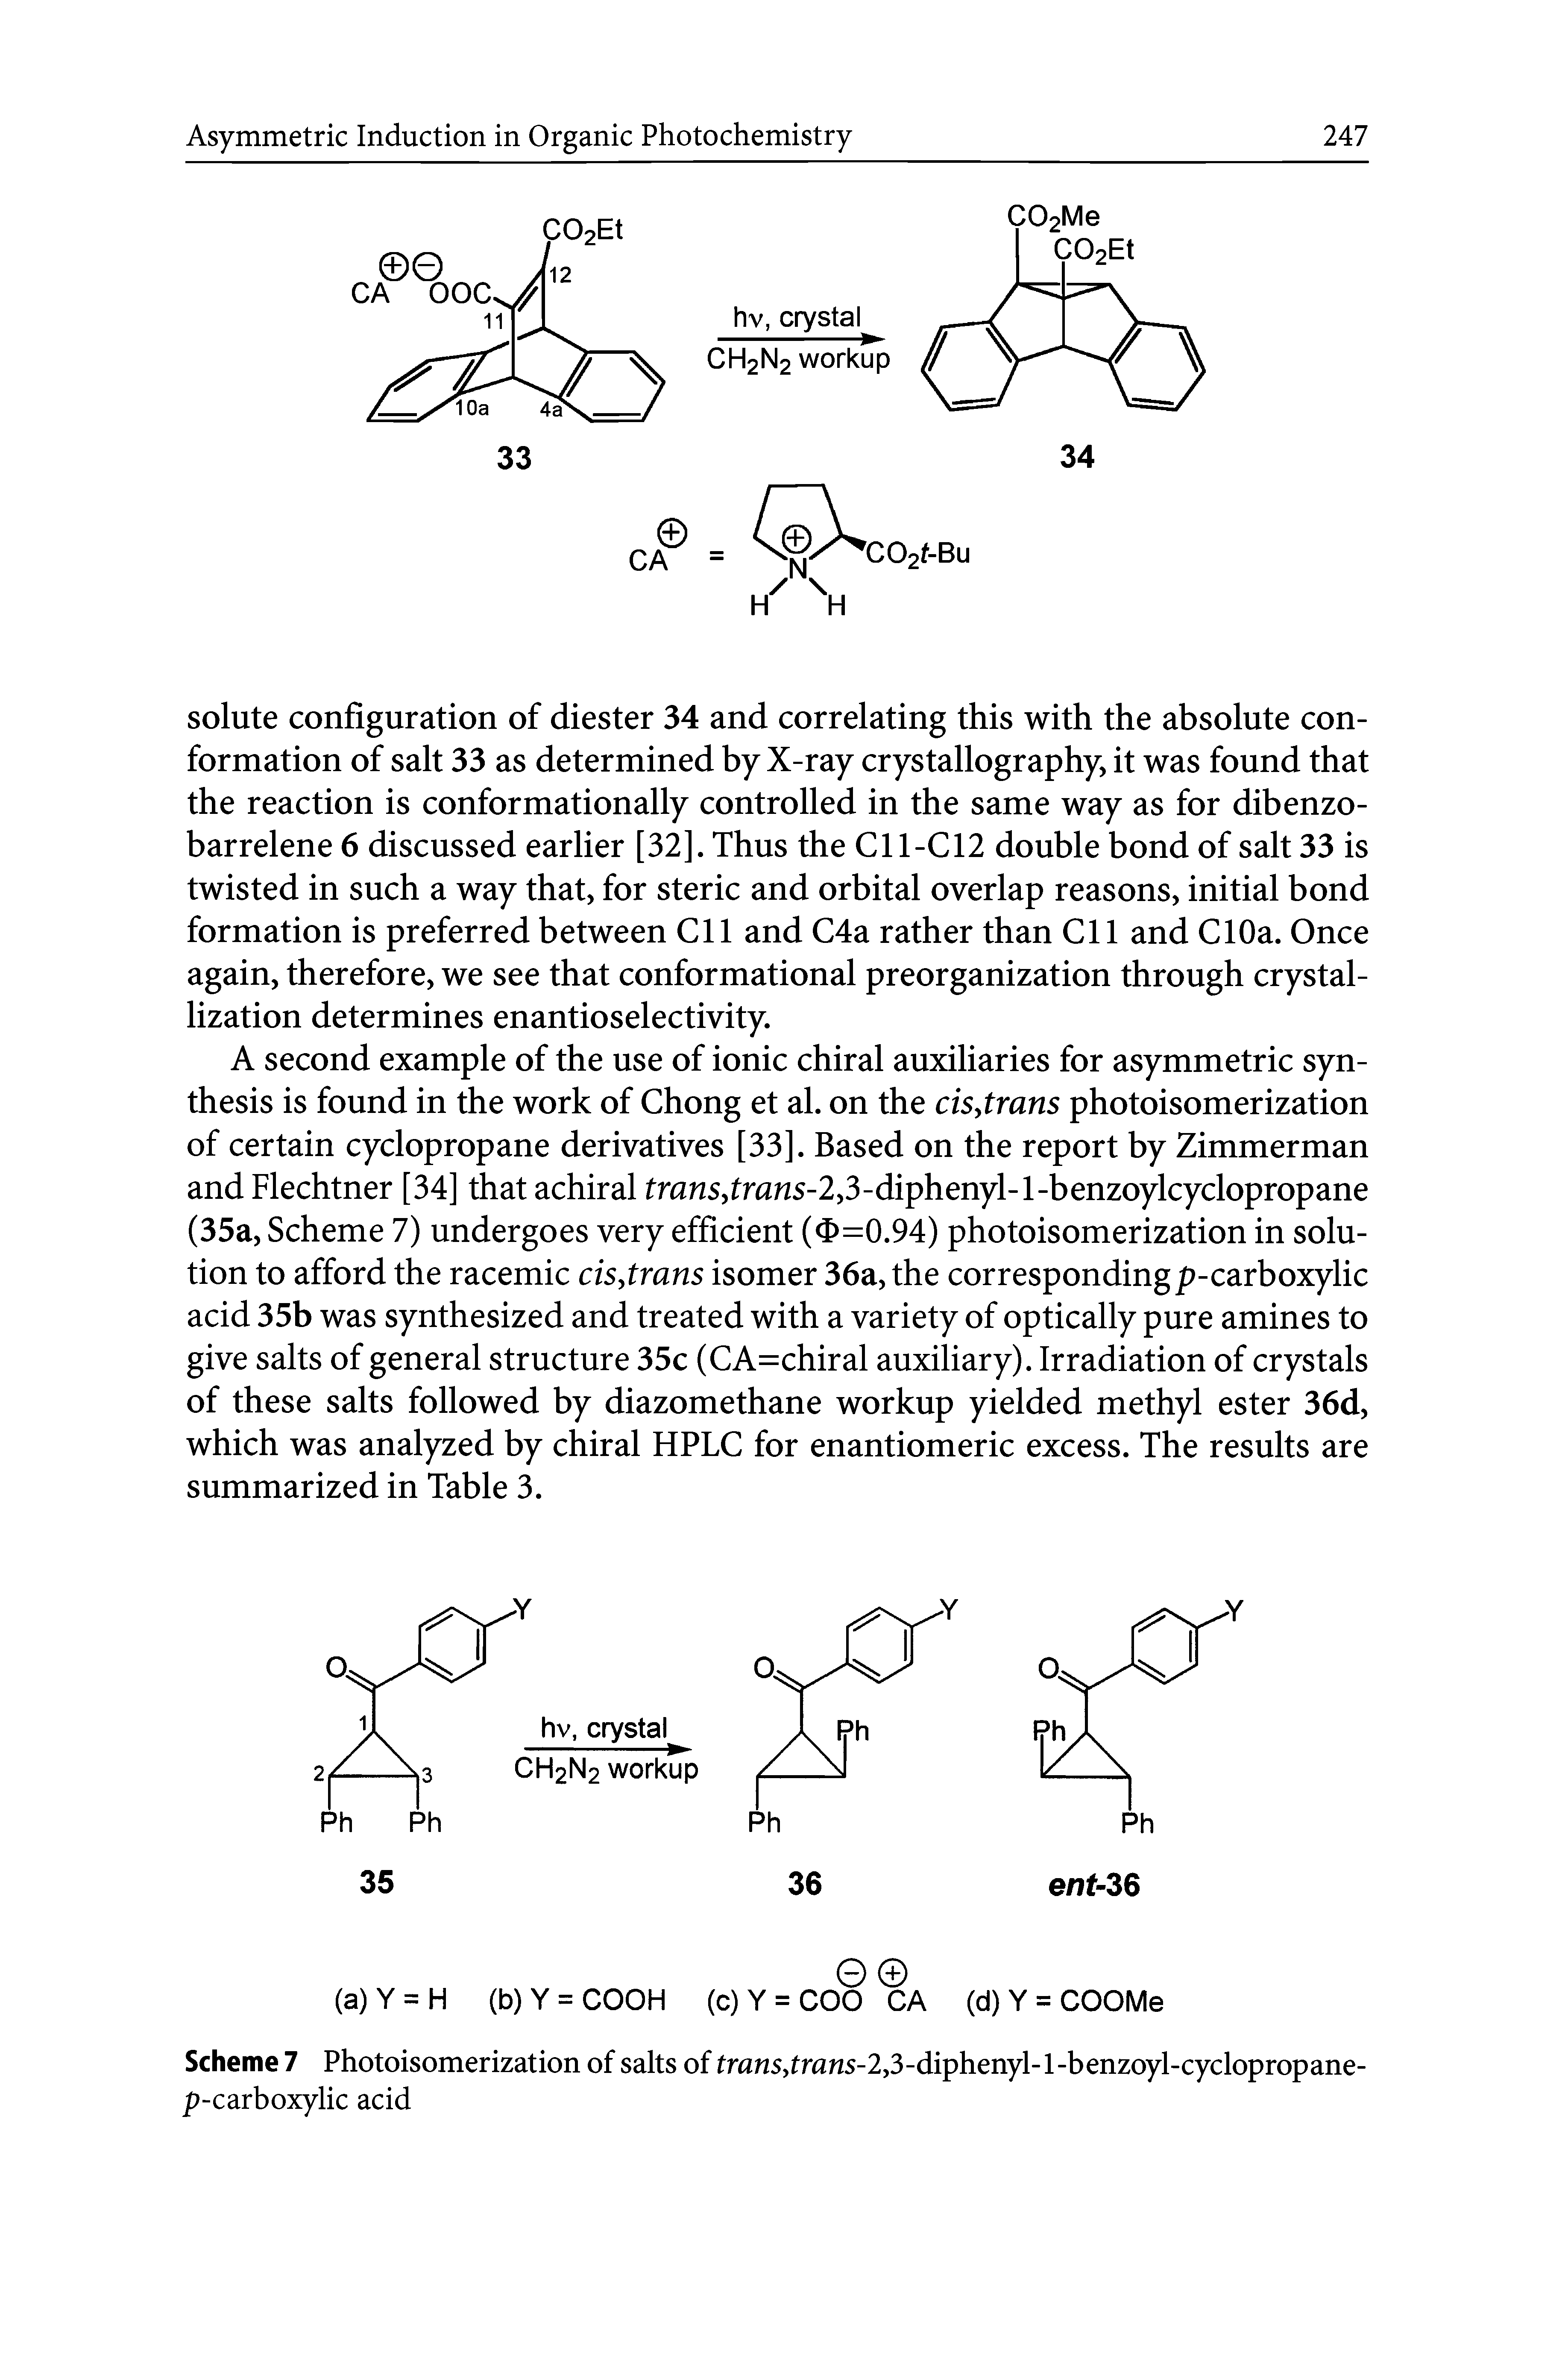 Scheme 7 Photoisomerization of salts of frans,frans-2,3-diphenyl-1-benzoyl-cyclopropane-p-carboxylic acid...